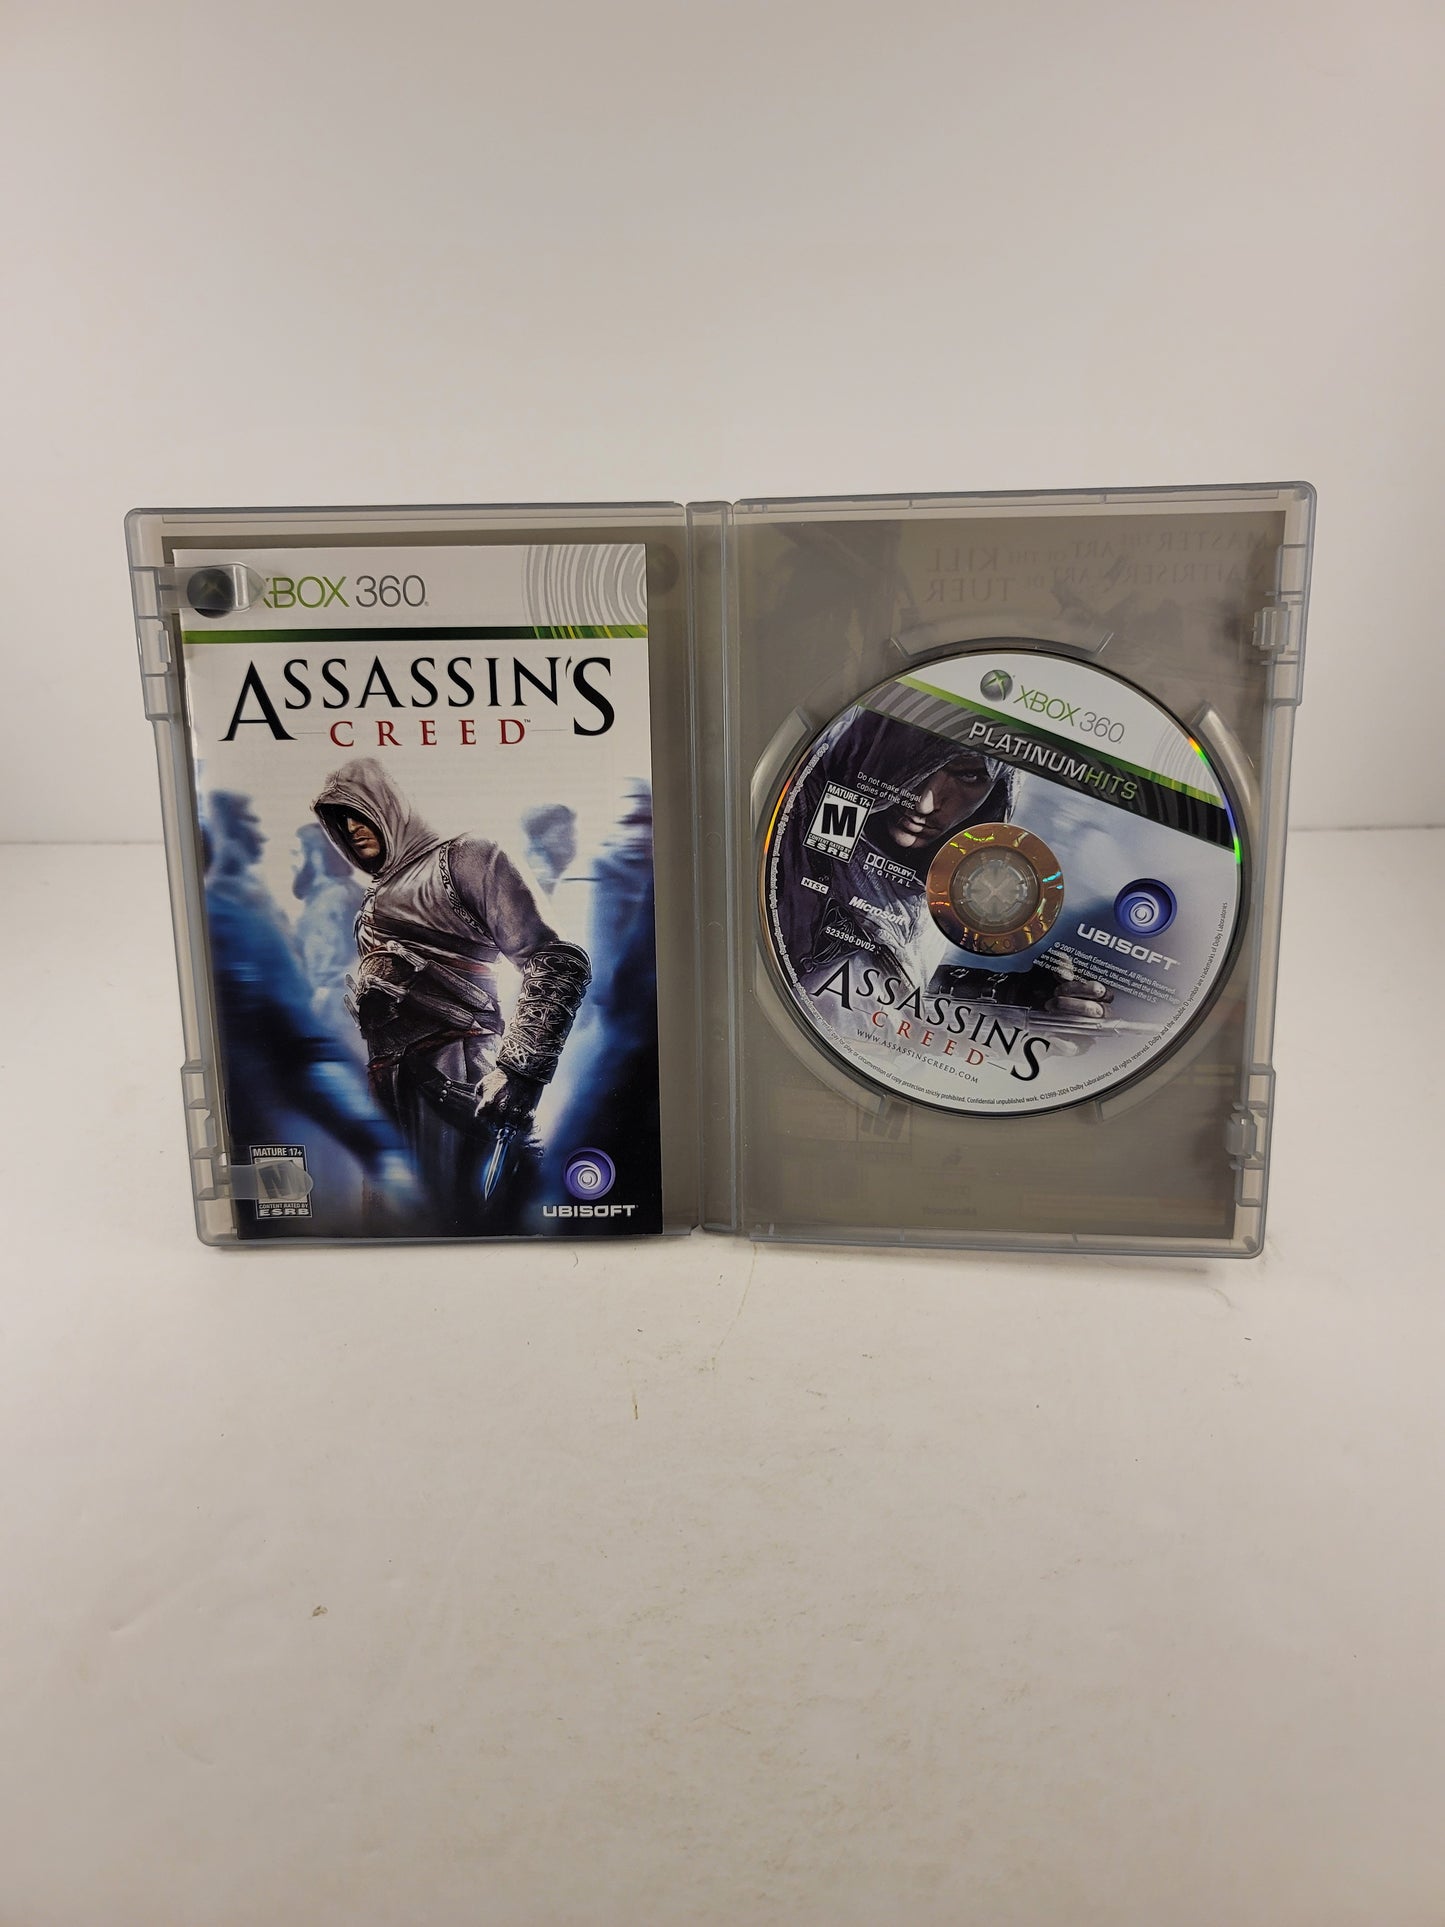 Assassin's Creed (Microsoft Xbox 360, 2007)